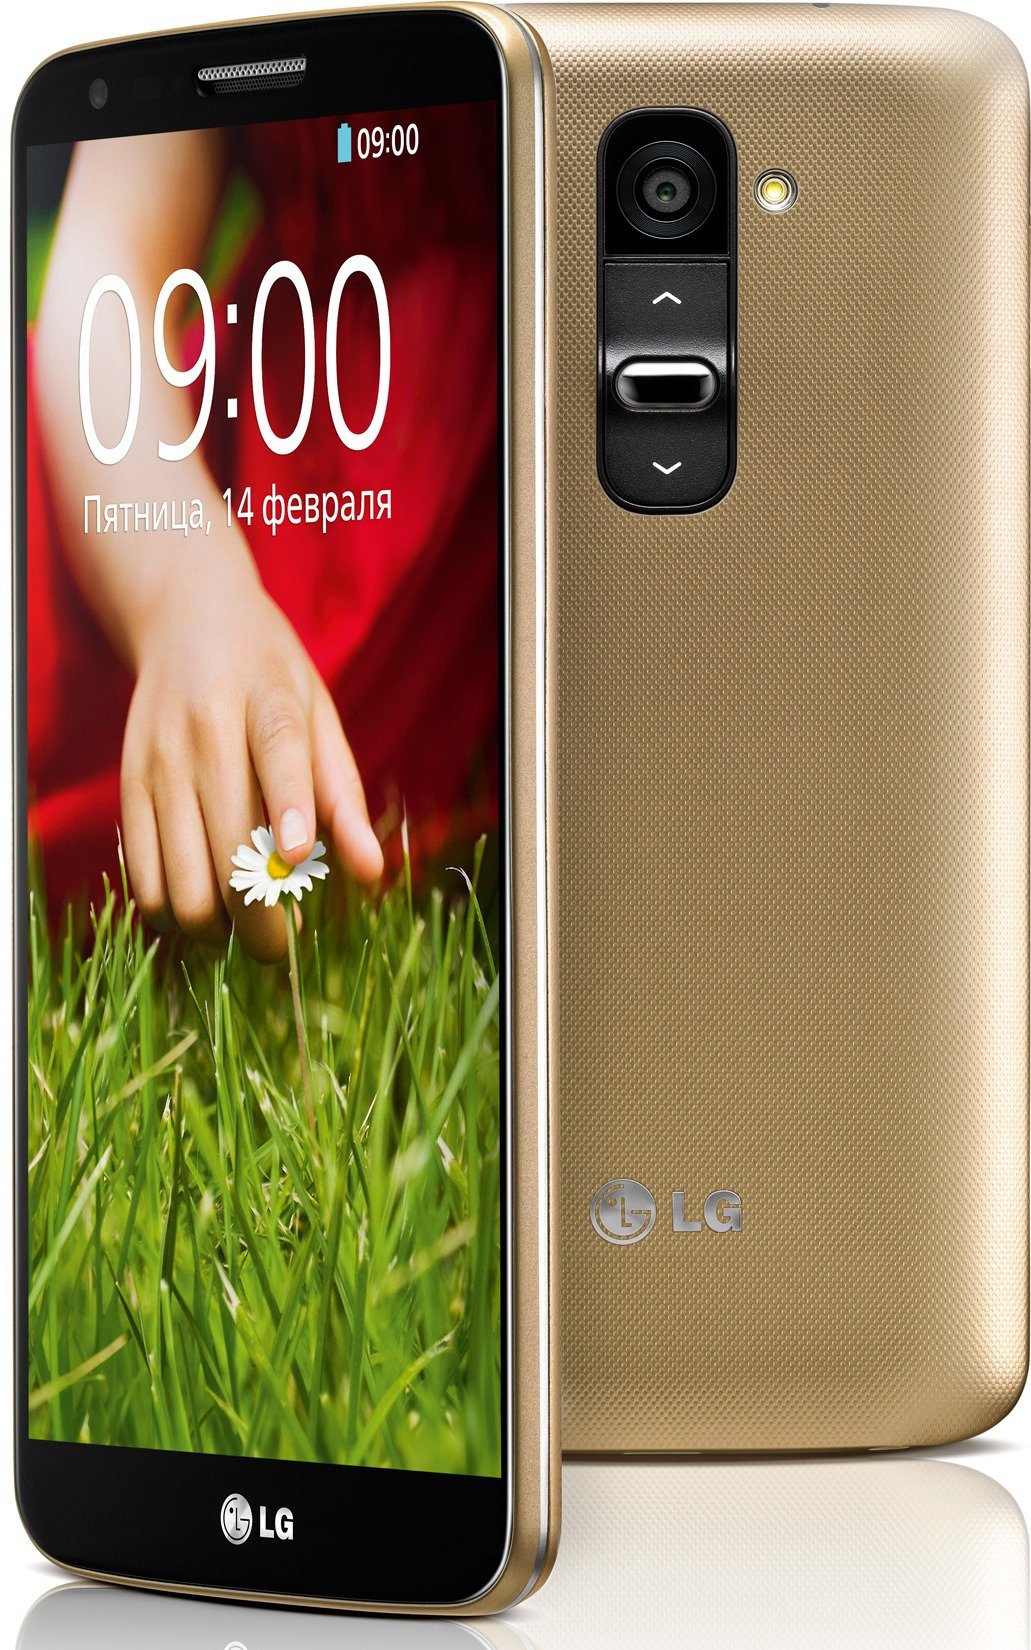 Lg телефон номер. LG g2 32gb. LG g2 d802. LG-d802 LG g2. LG g2 d802 Gold.